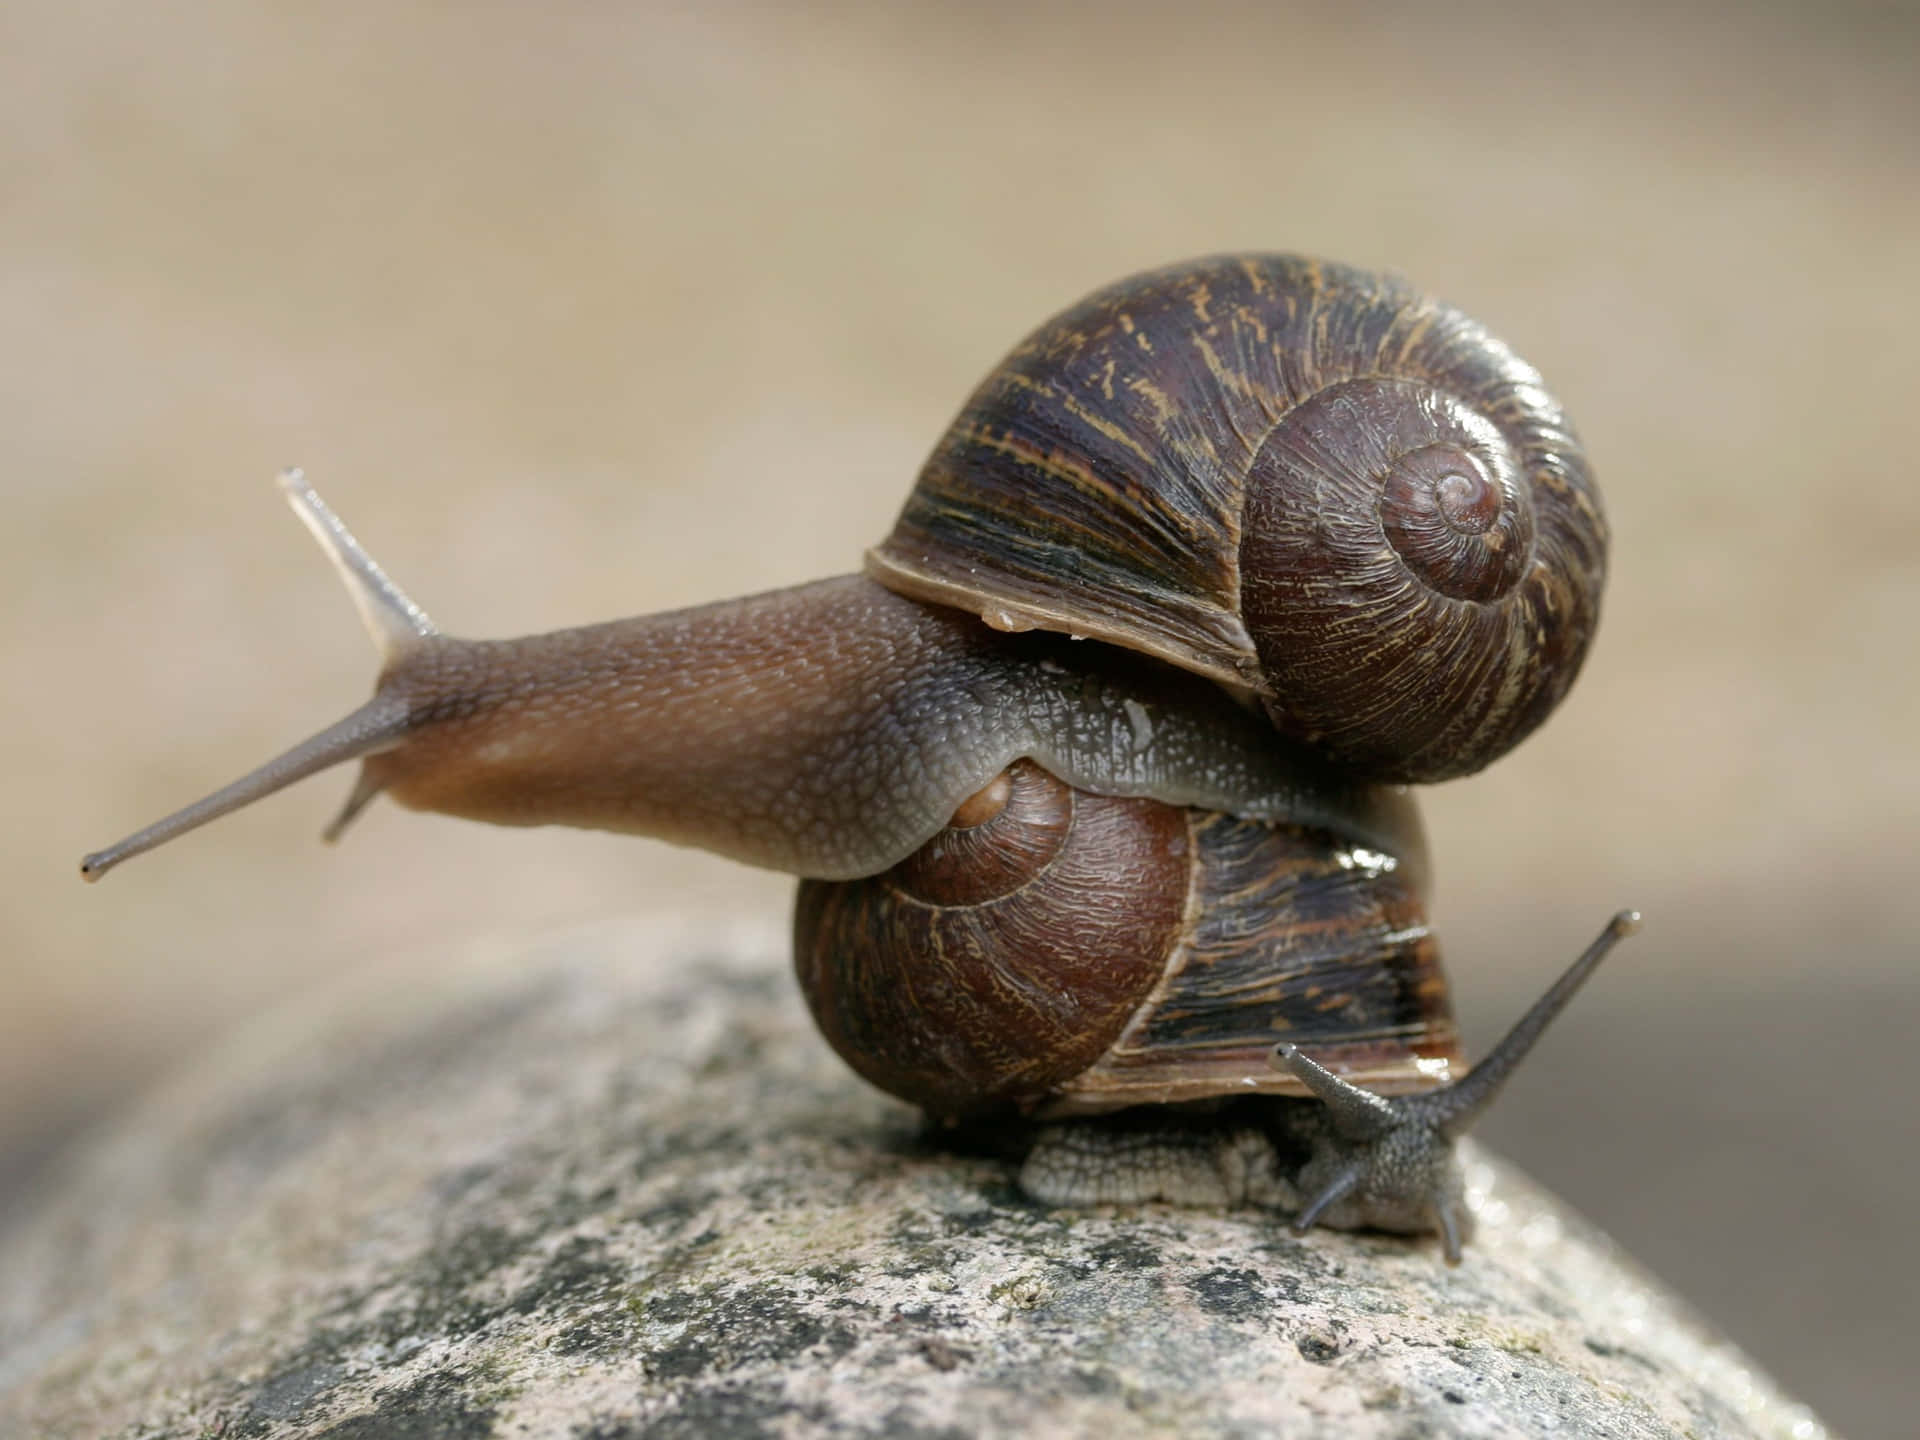 A snail making its way slowly.